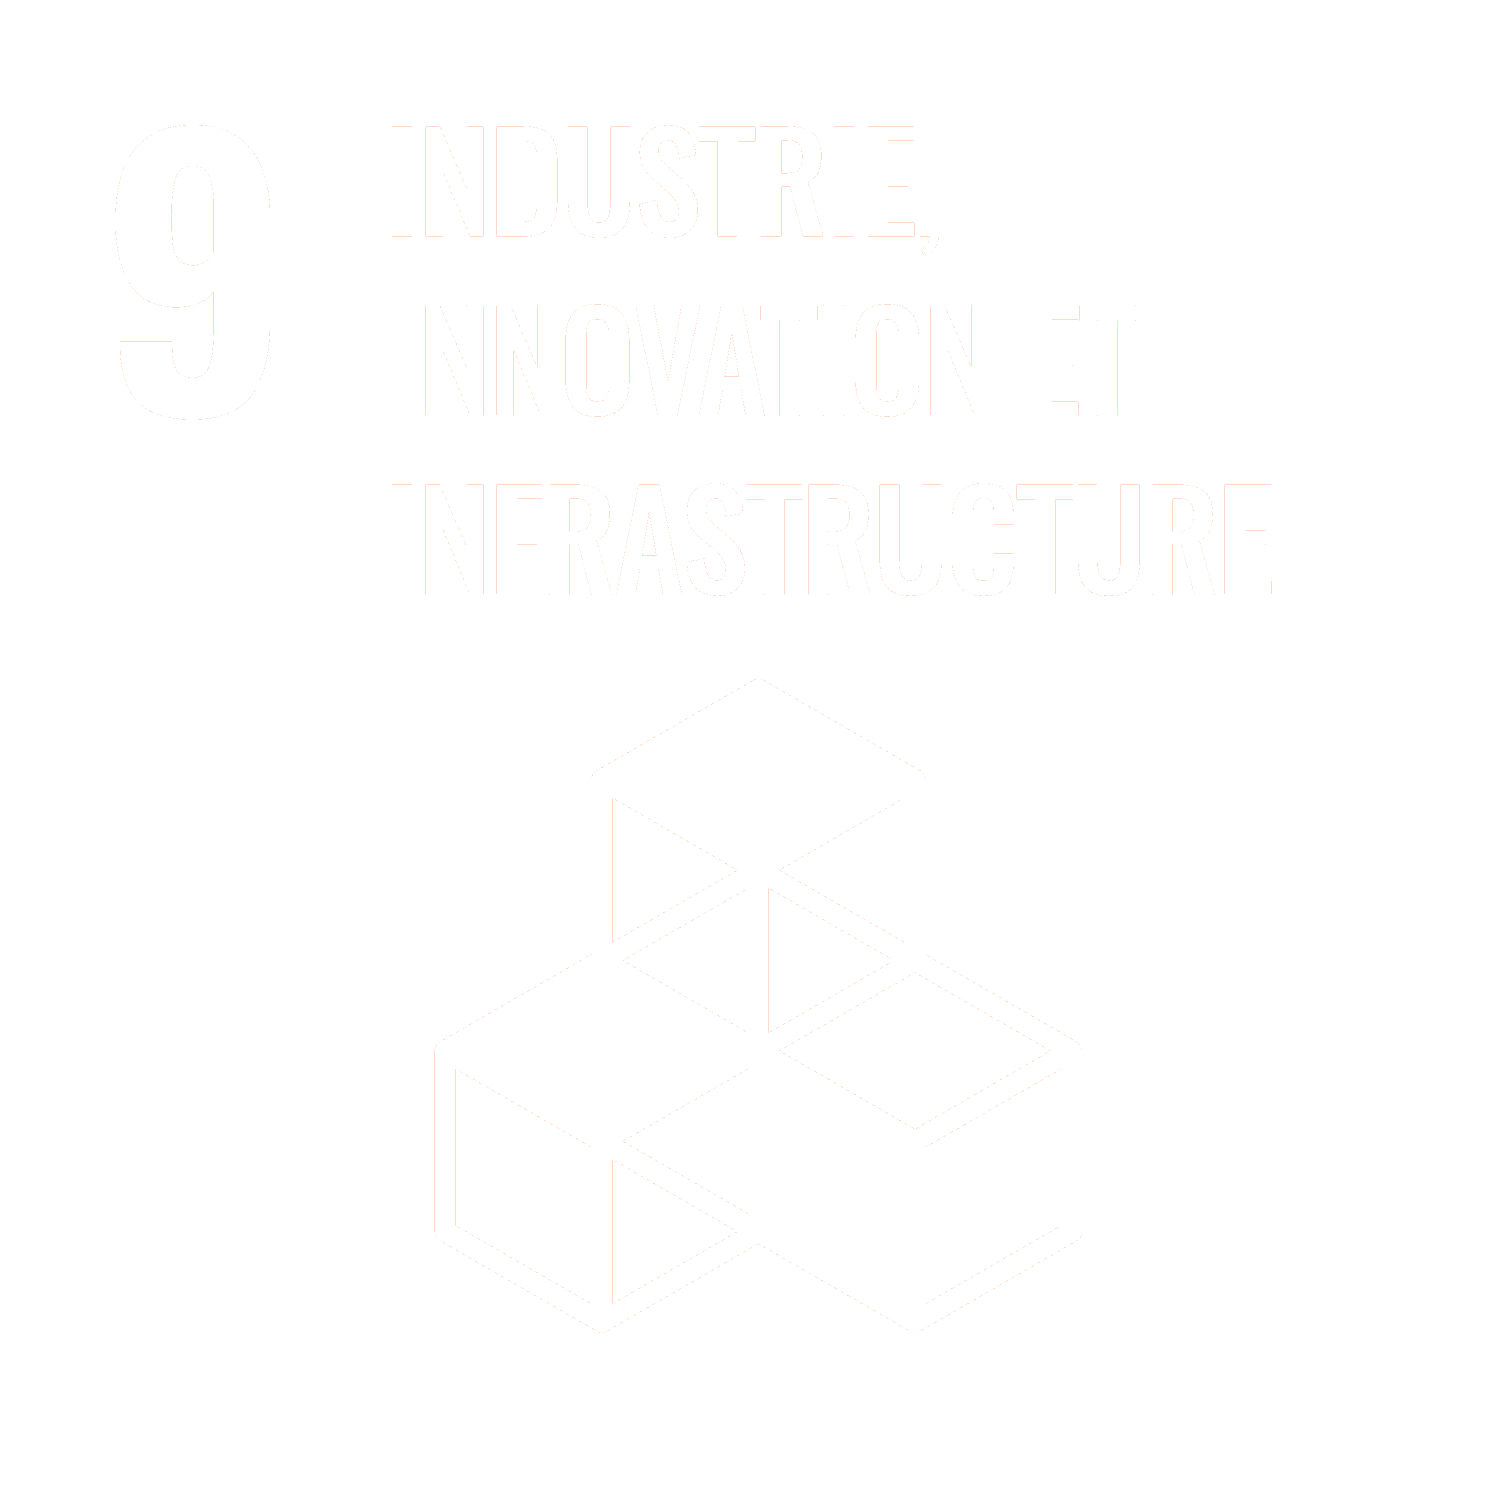 Innovation industrielle et infrastructure